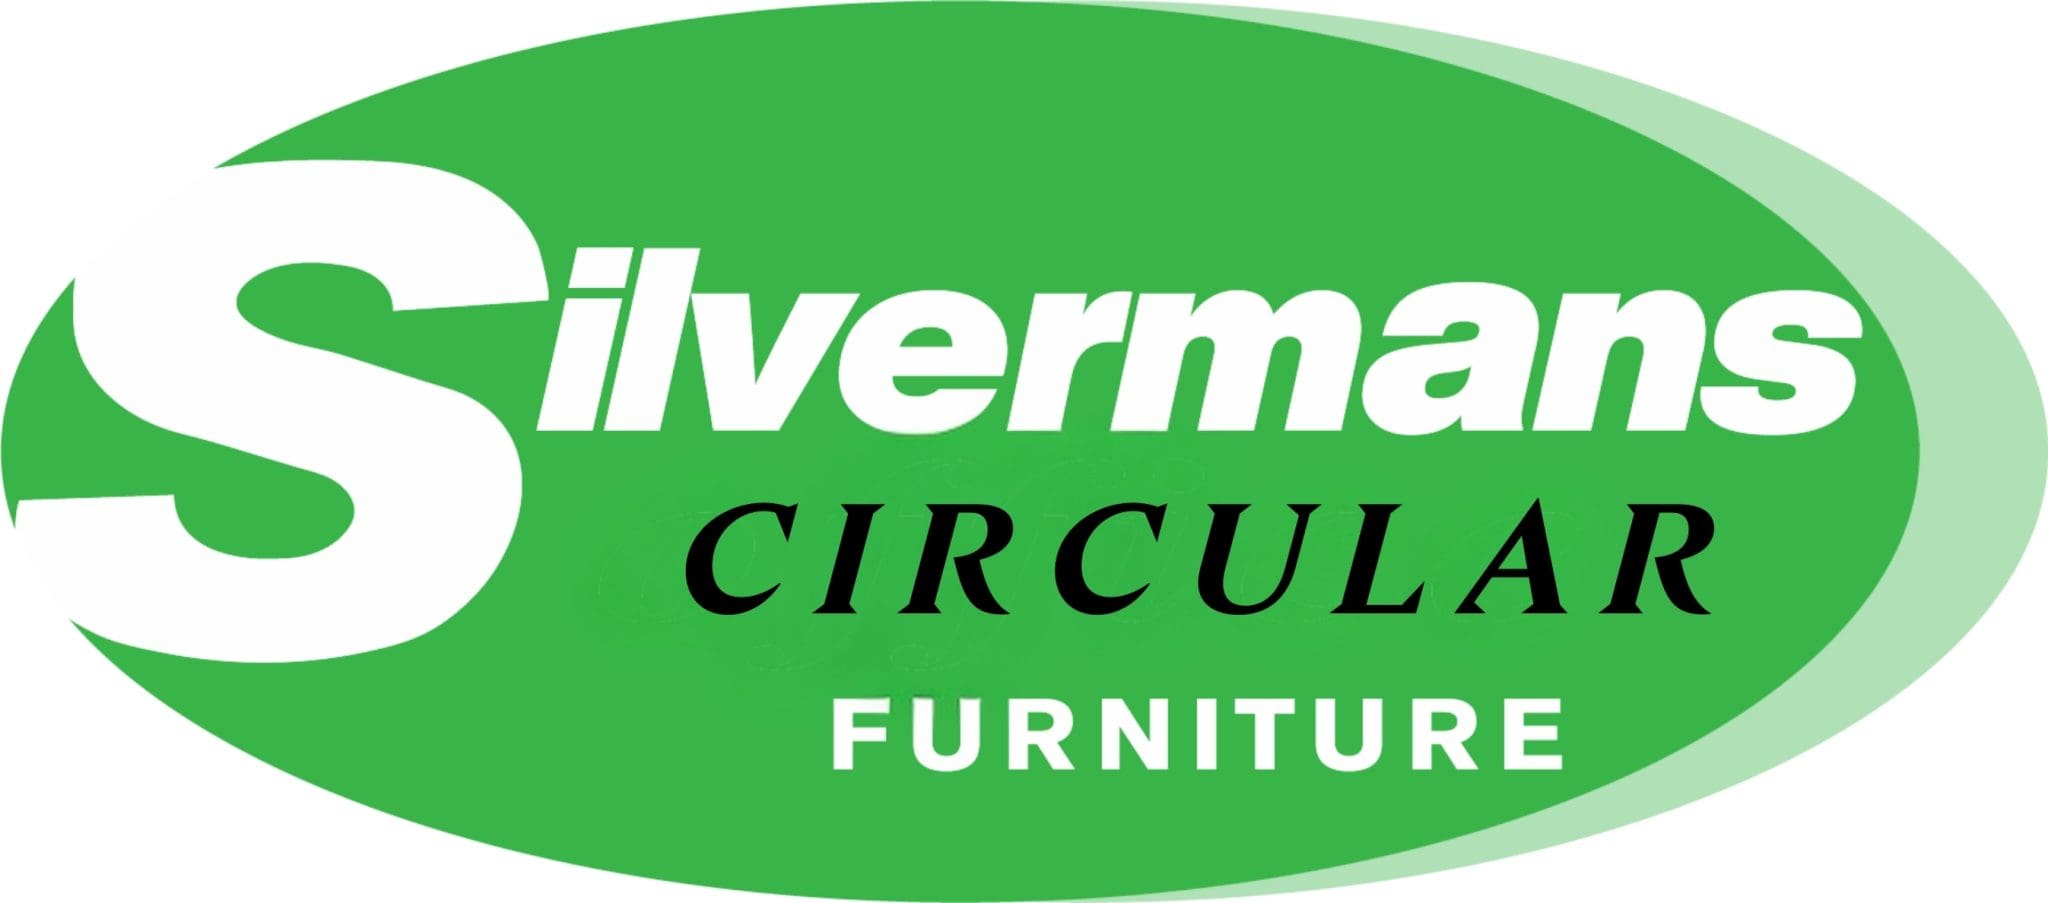 Silvermans Office Furniture Green Logo